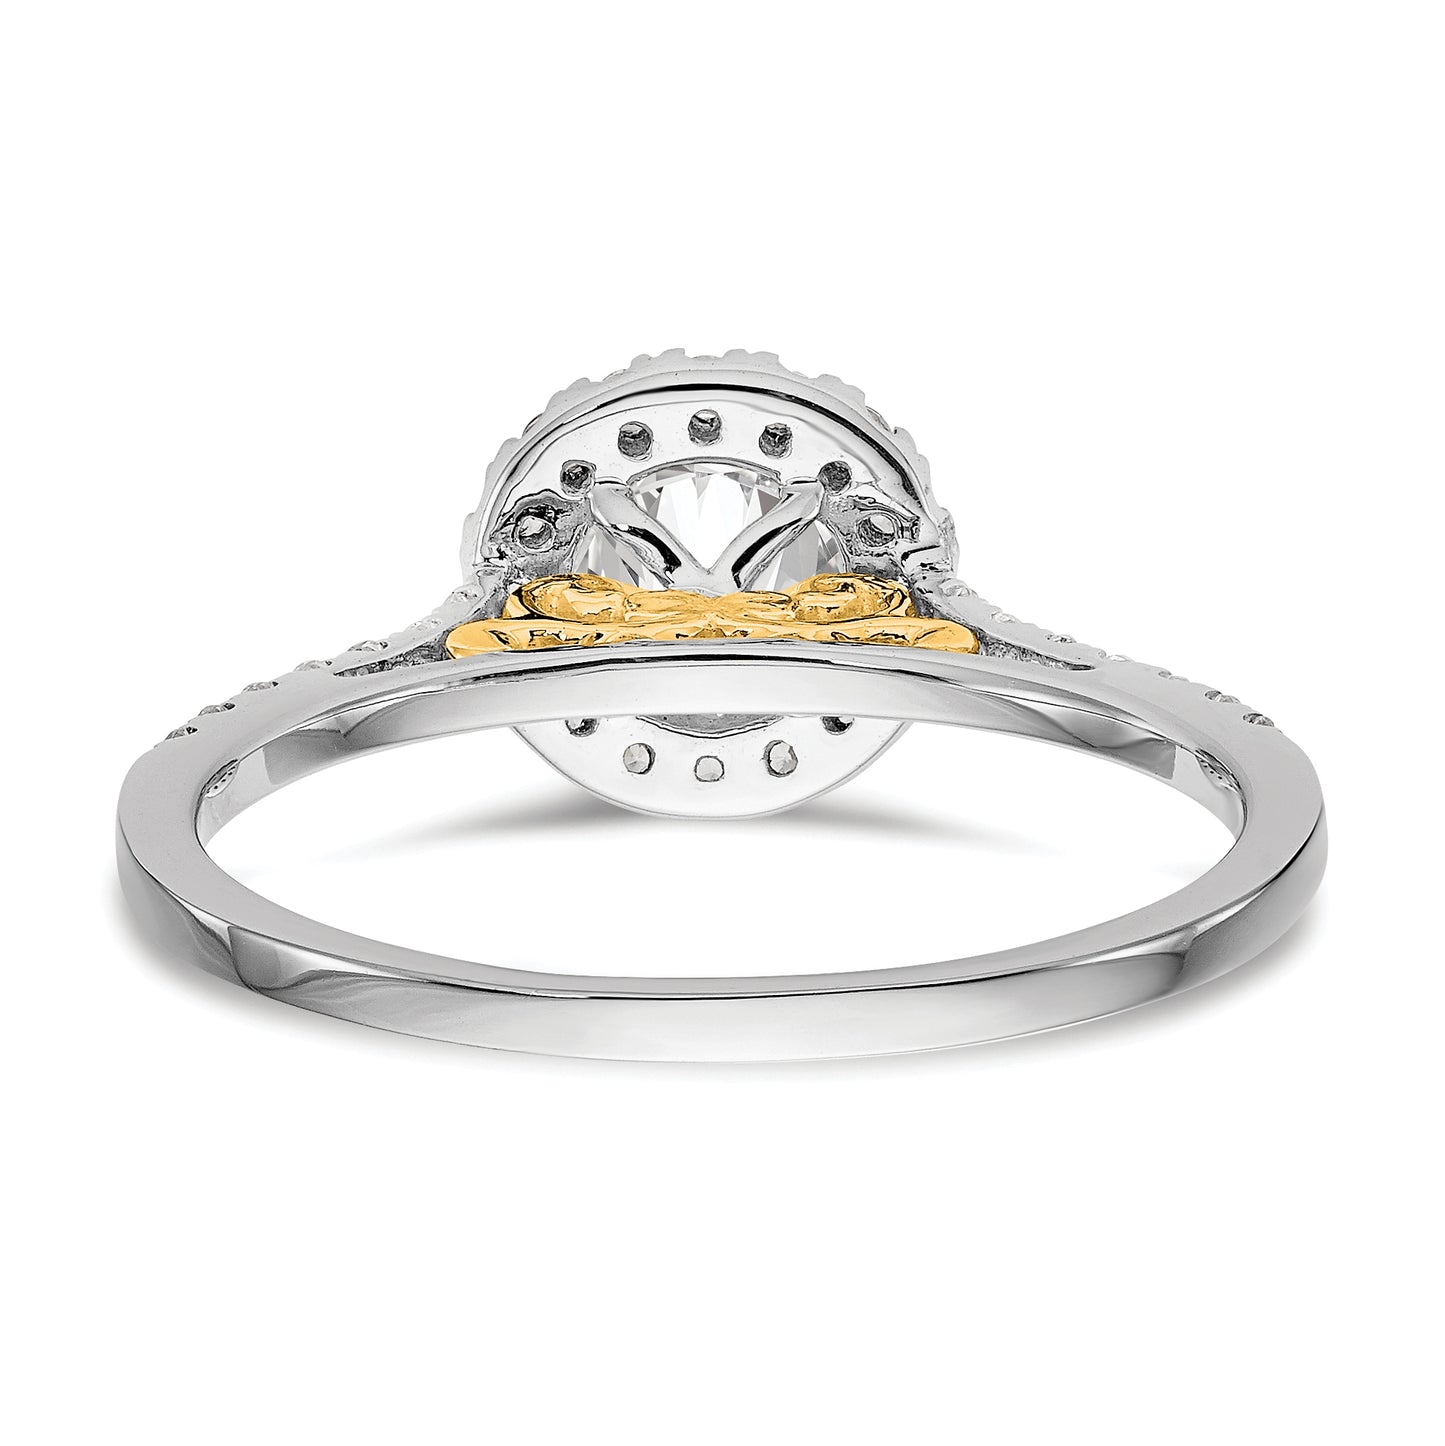 14k Two tone Gold Round Halo Simulated CZ Diamond Engagement Ring